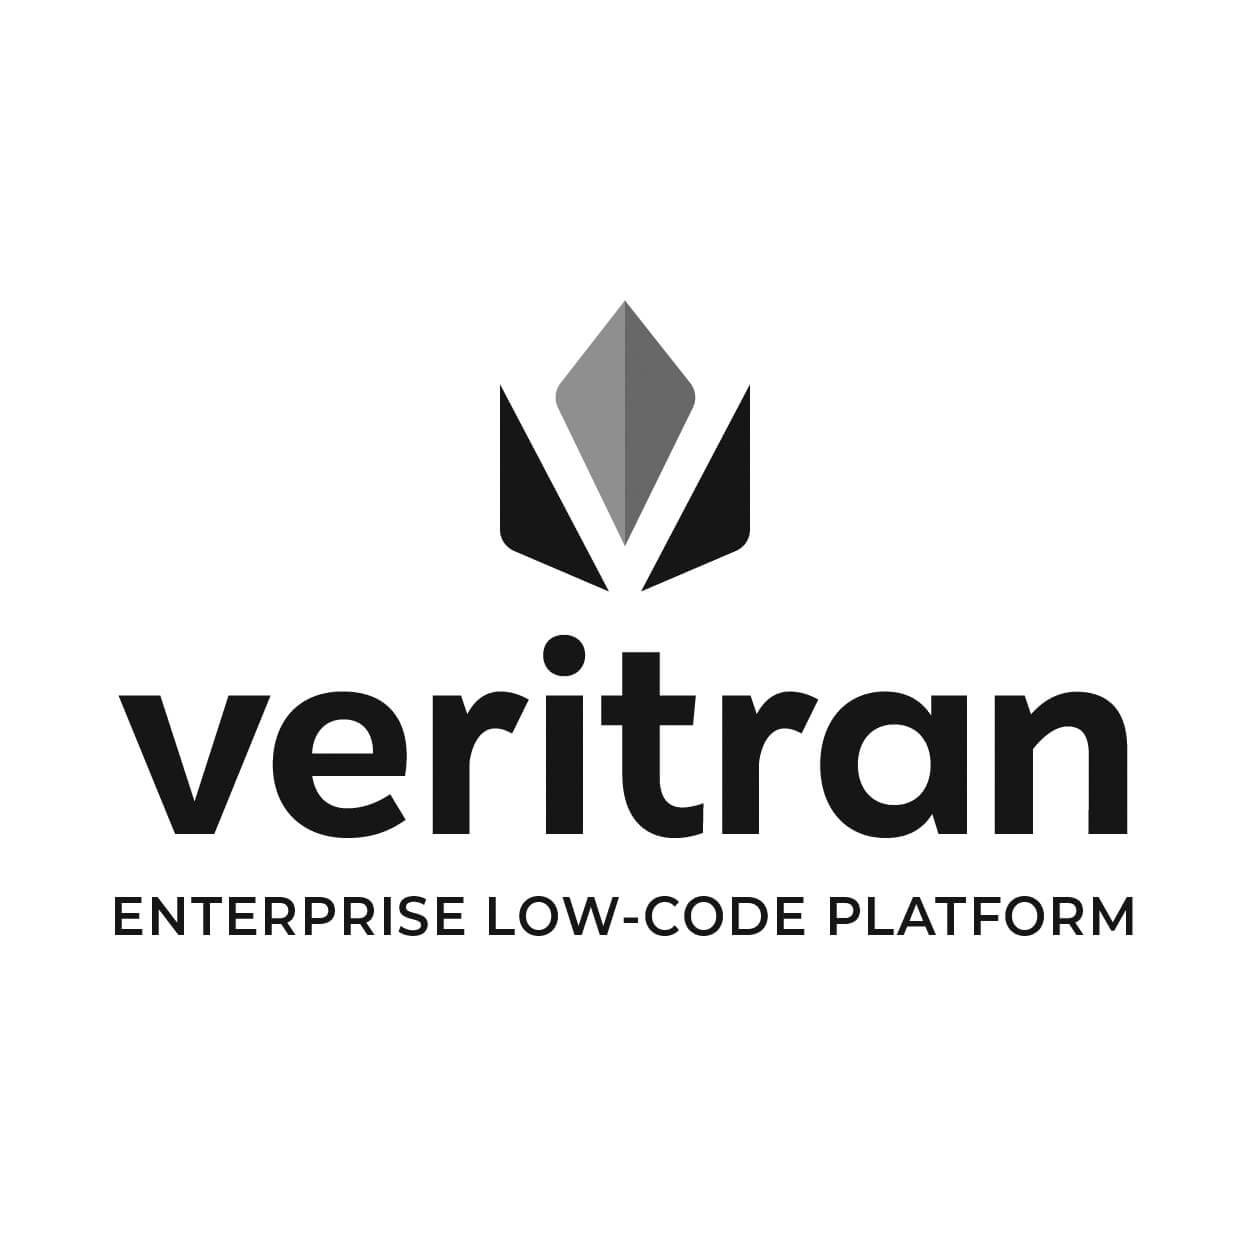 veritran Enterprise Low-Code Platform